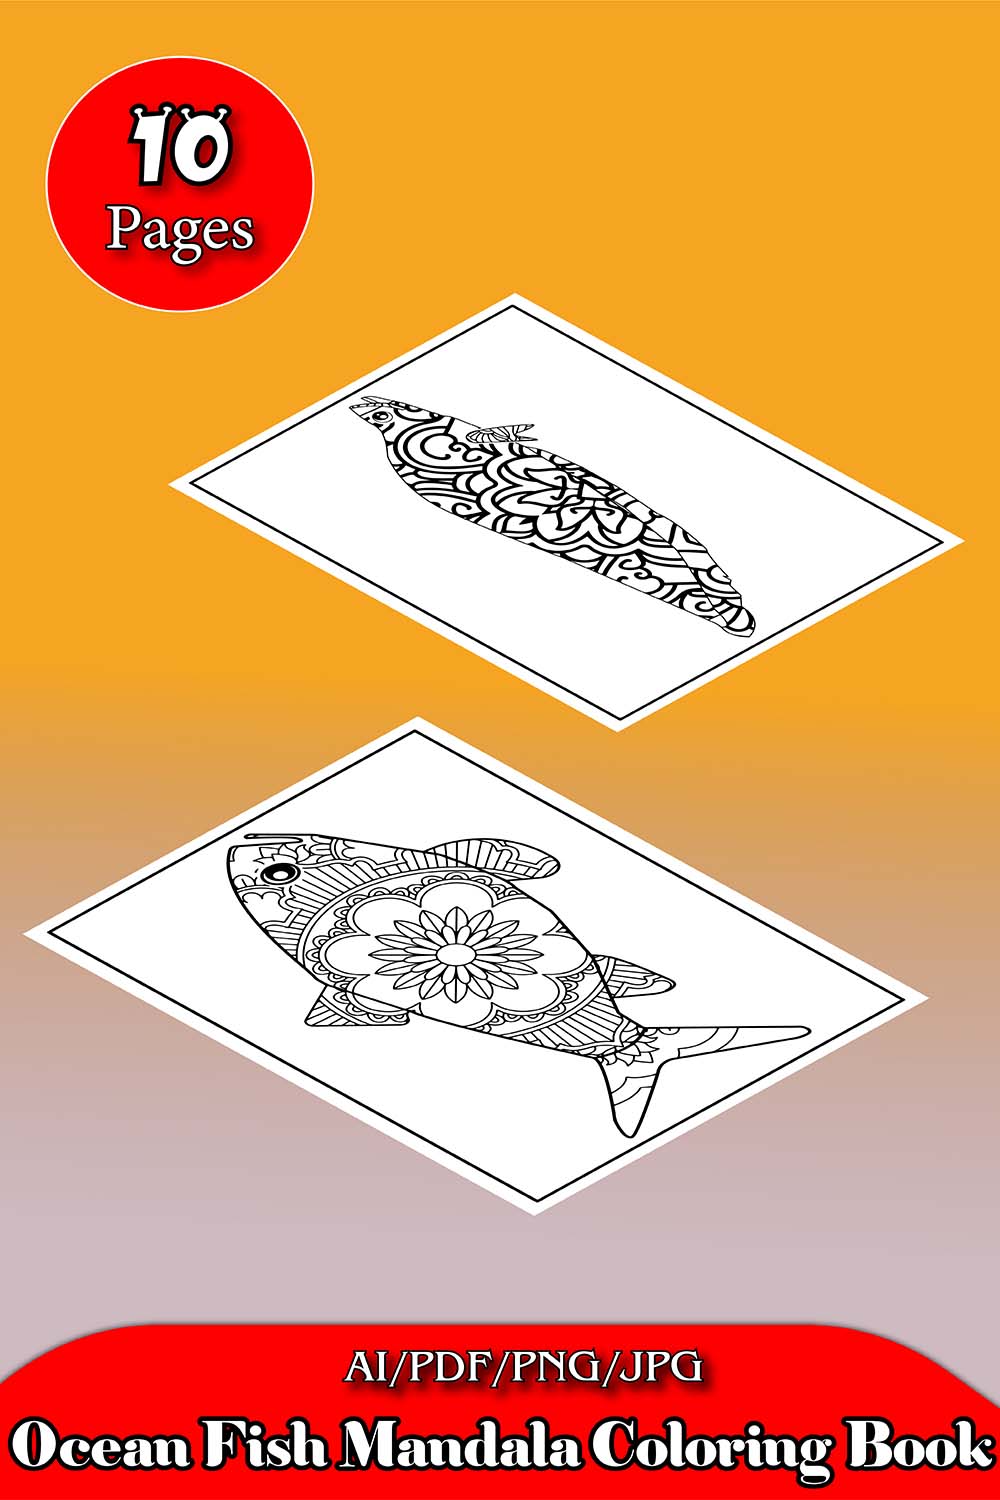 Ocean Fish Mandala Coloring Book pinterest.